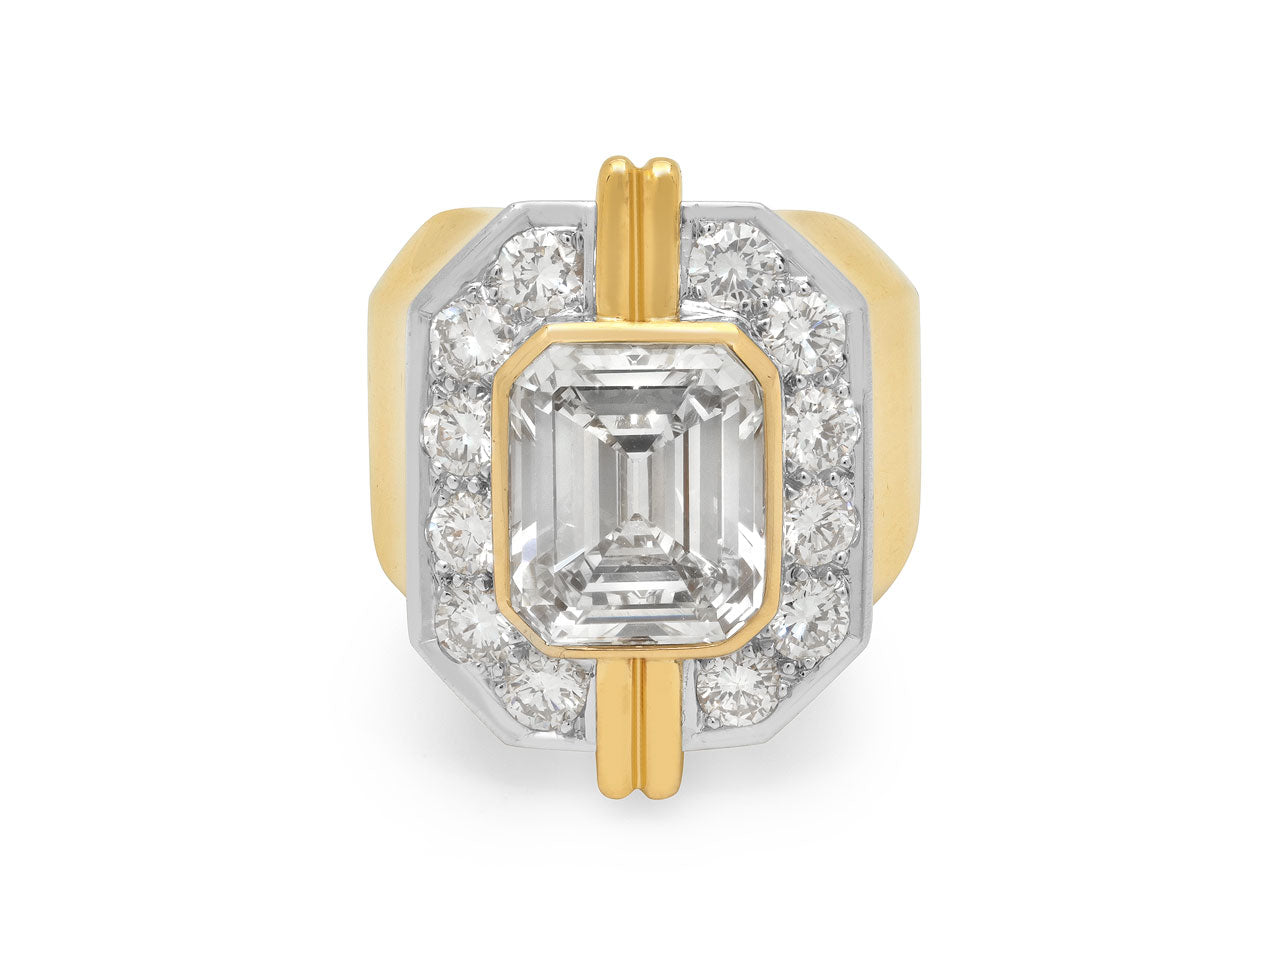 Emerald-cut Diamond, 4.53 carat M/VS1, Ring in 18K Gold and Platinum